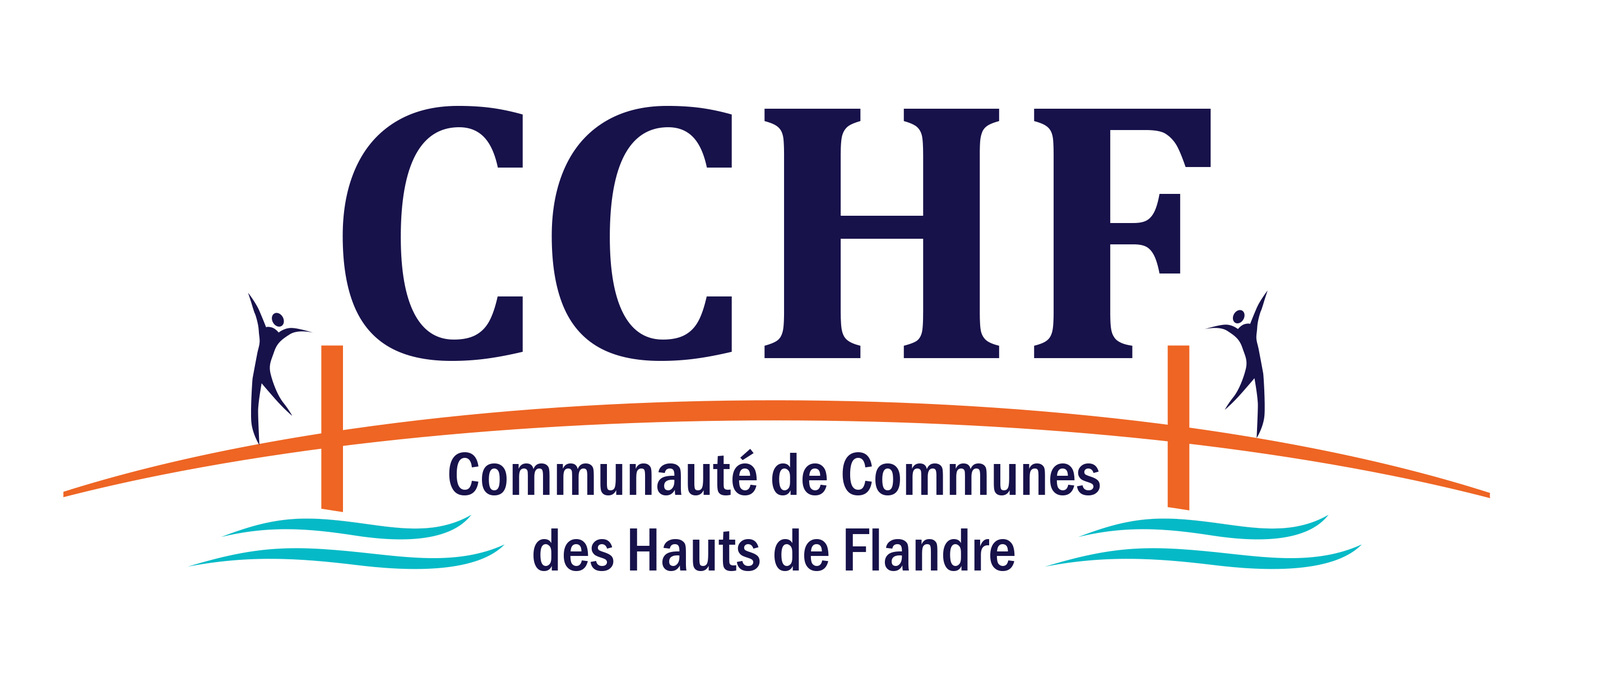 CCHF-logo.jpg